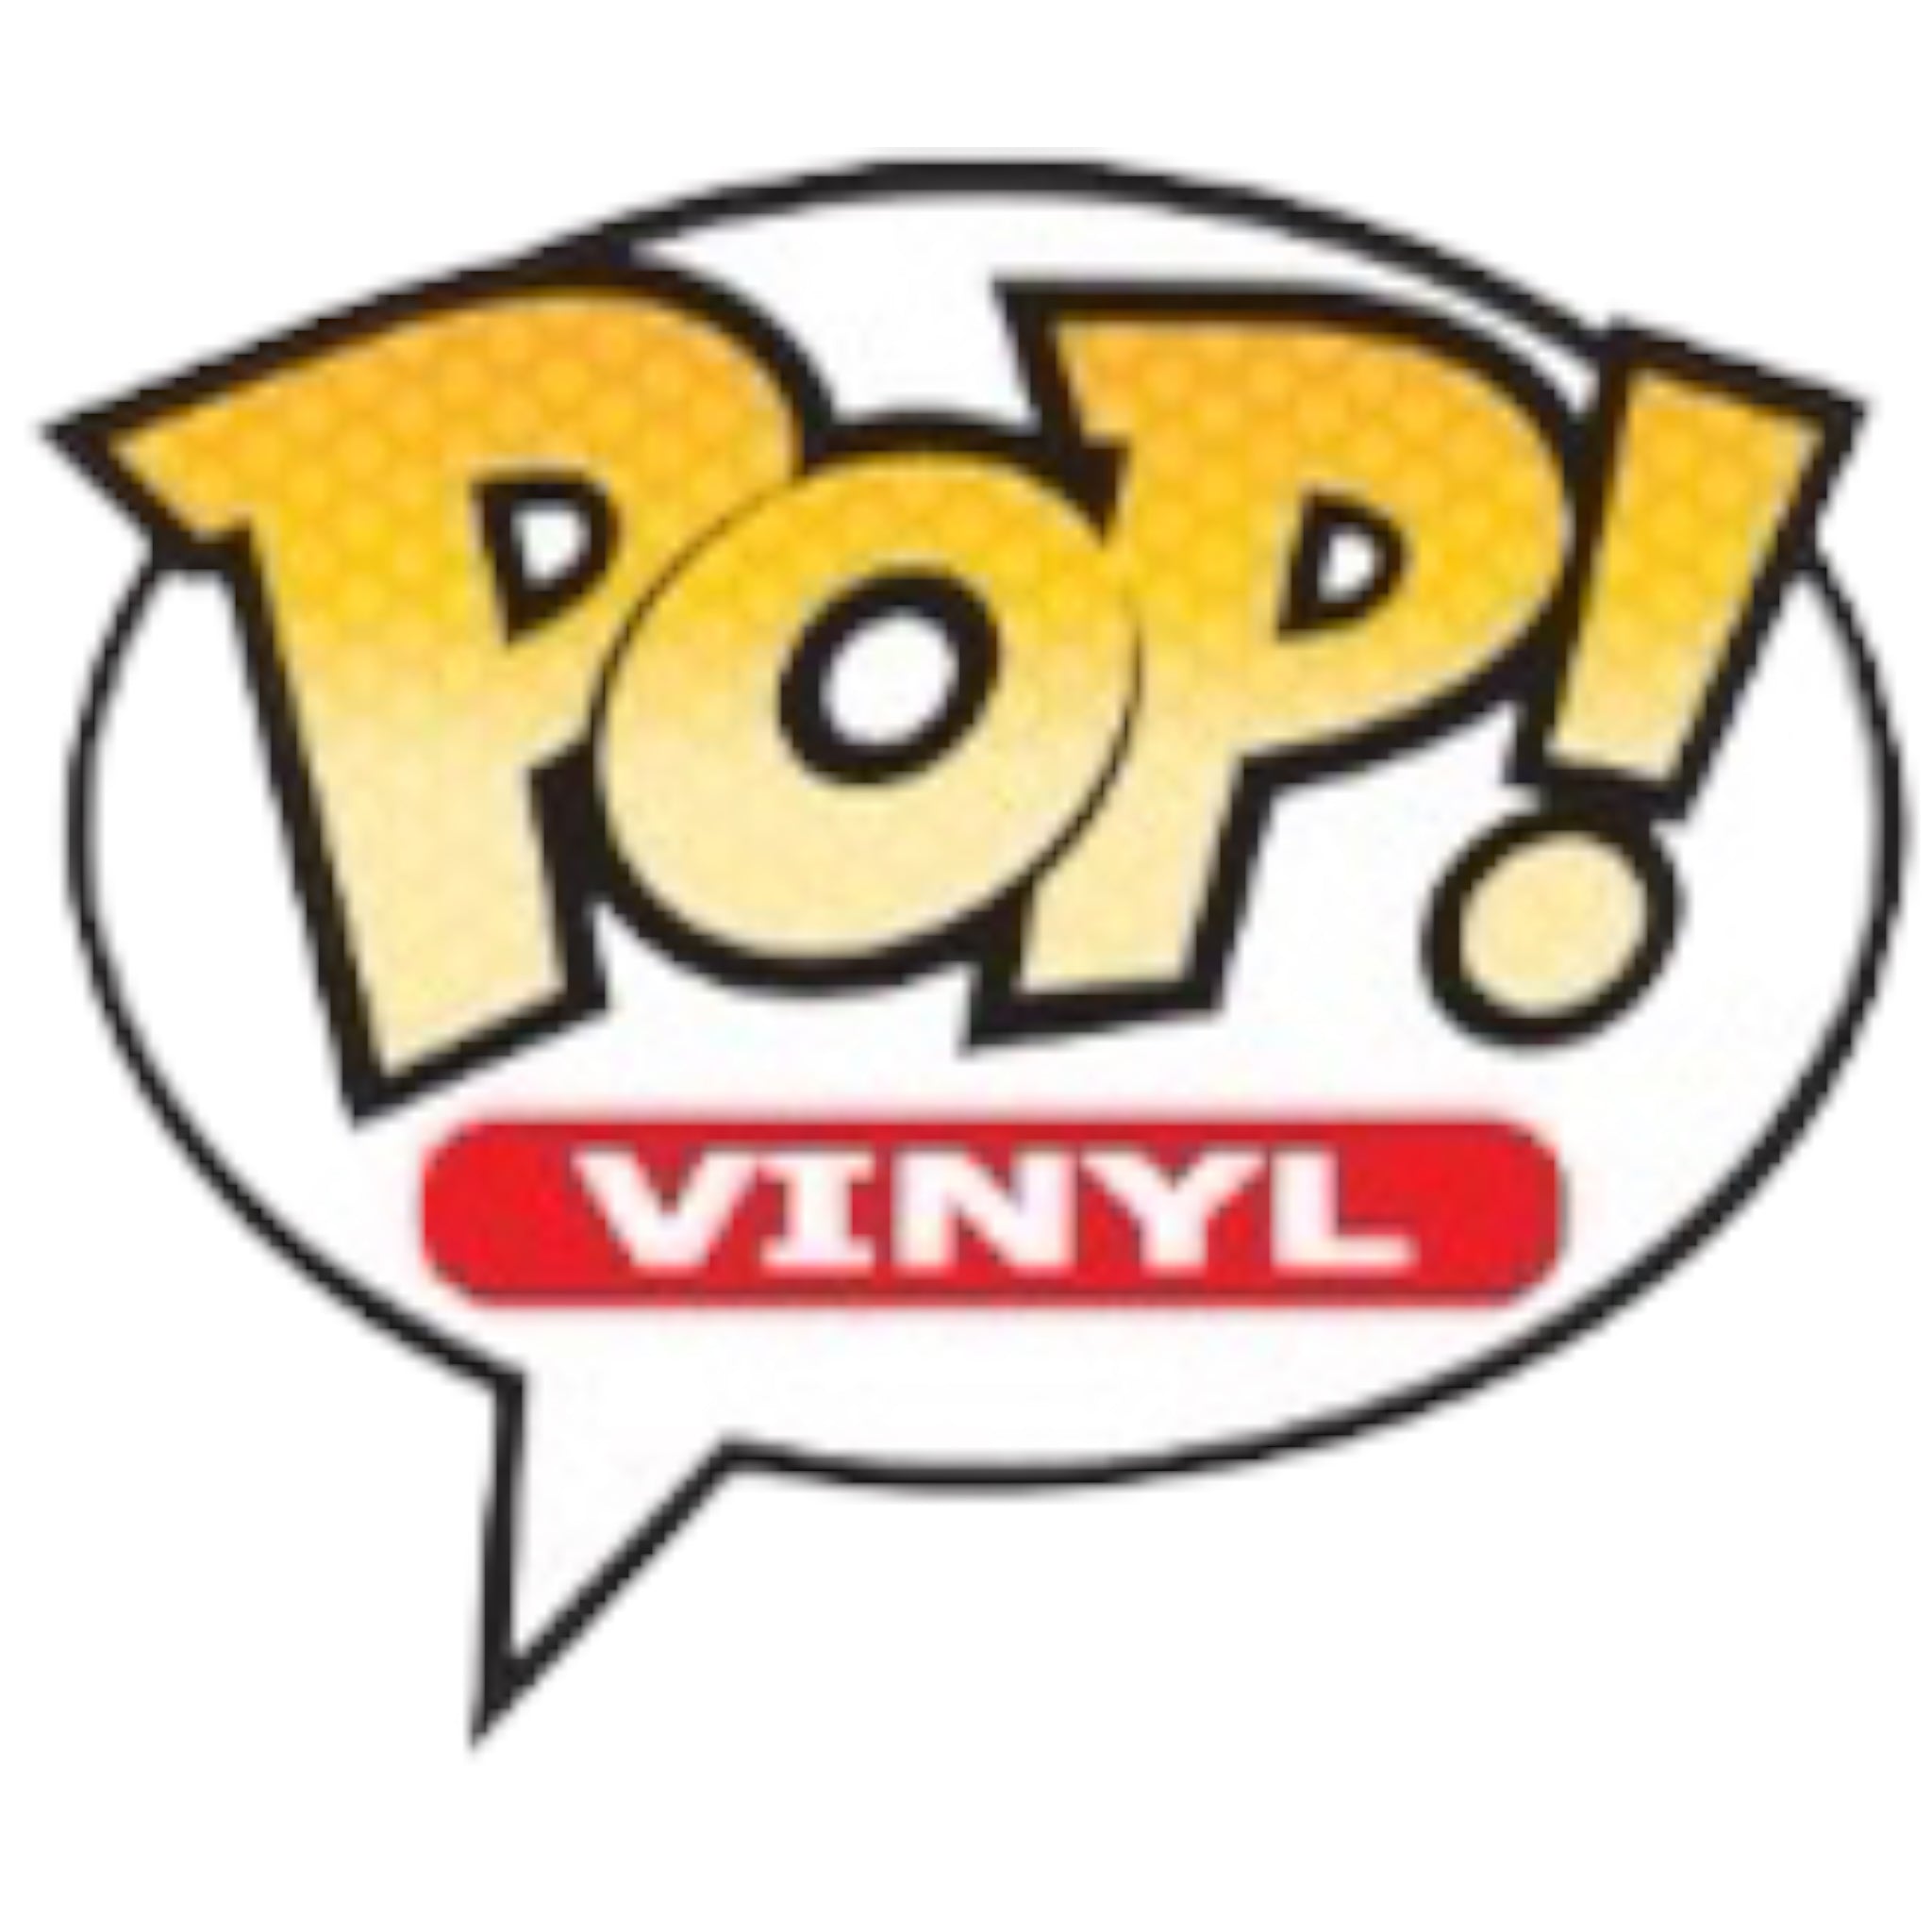 Funko Pop Shop - Sammelfiguren - Vinyl Figuren